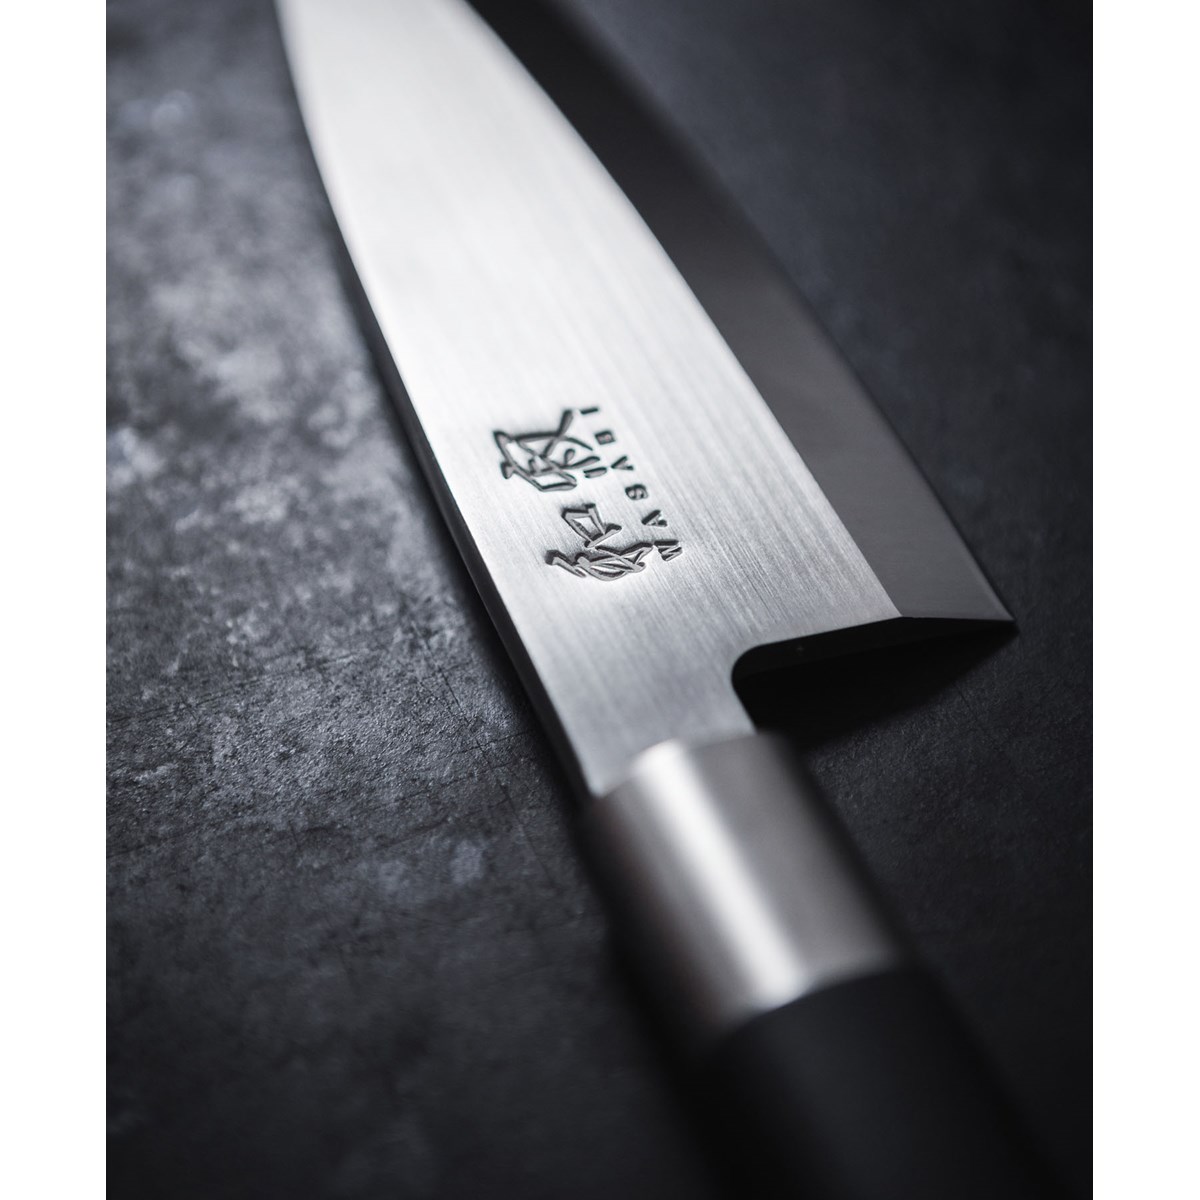 KAI Wasabi Black fleksibel fileteringskniv 18 cm 